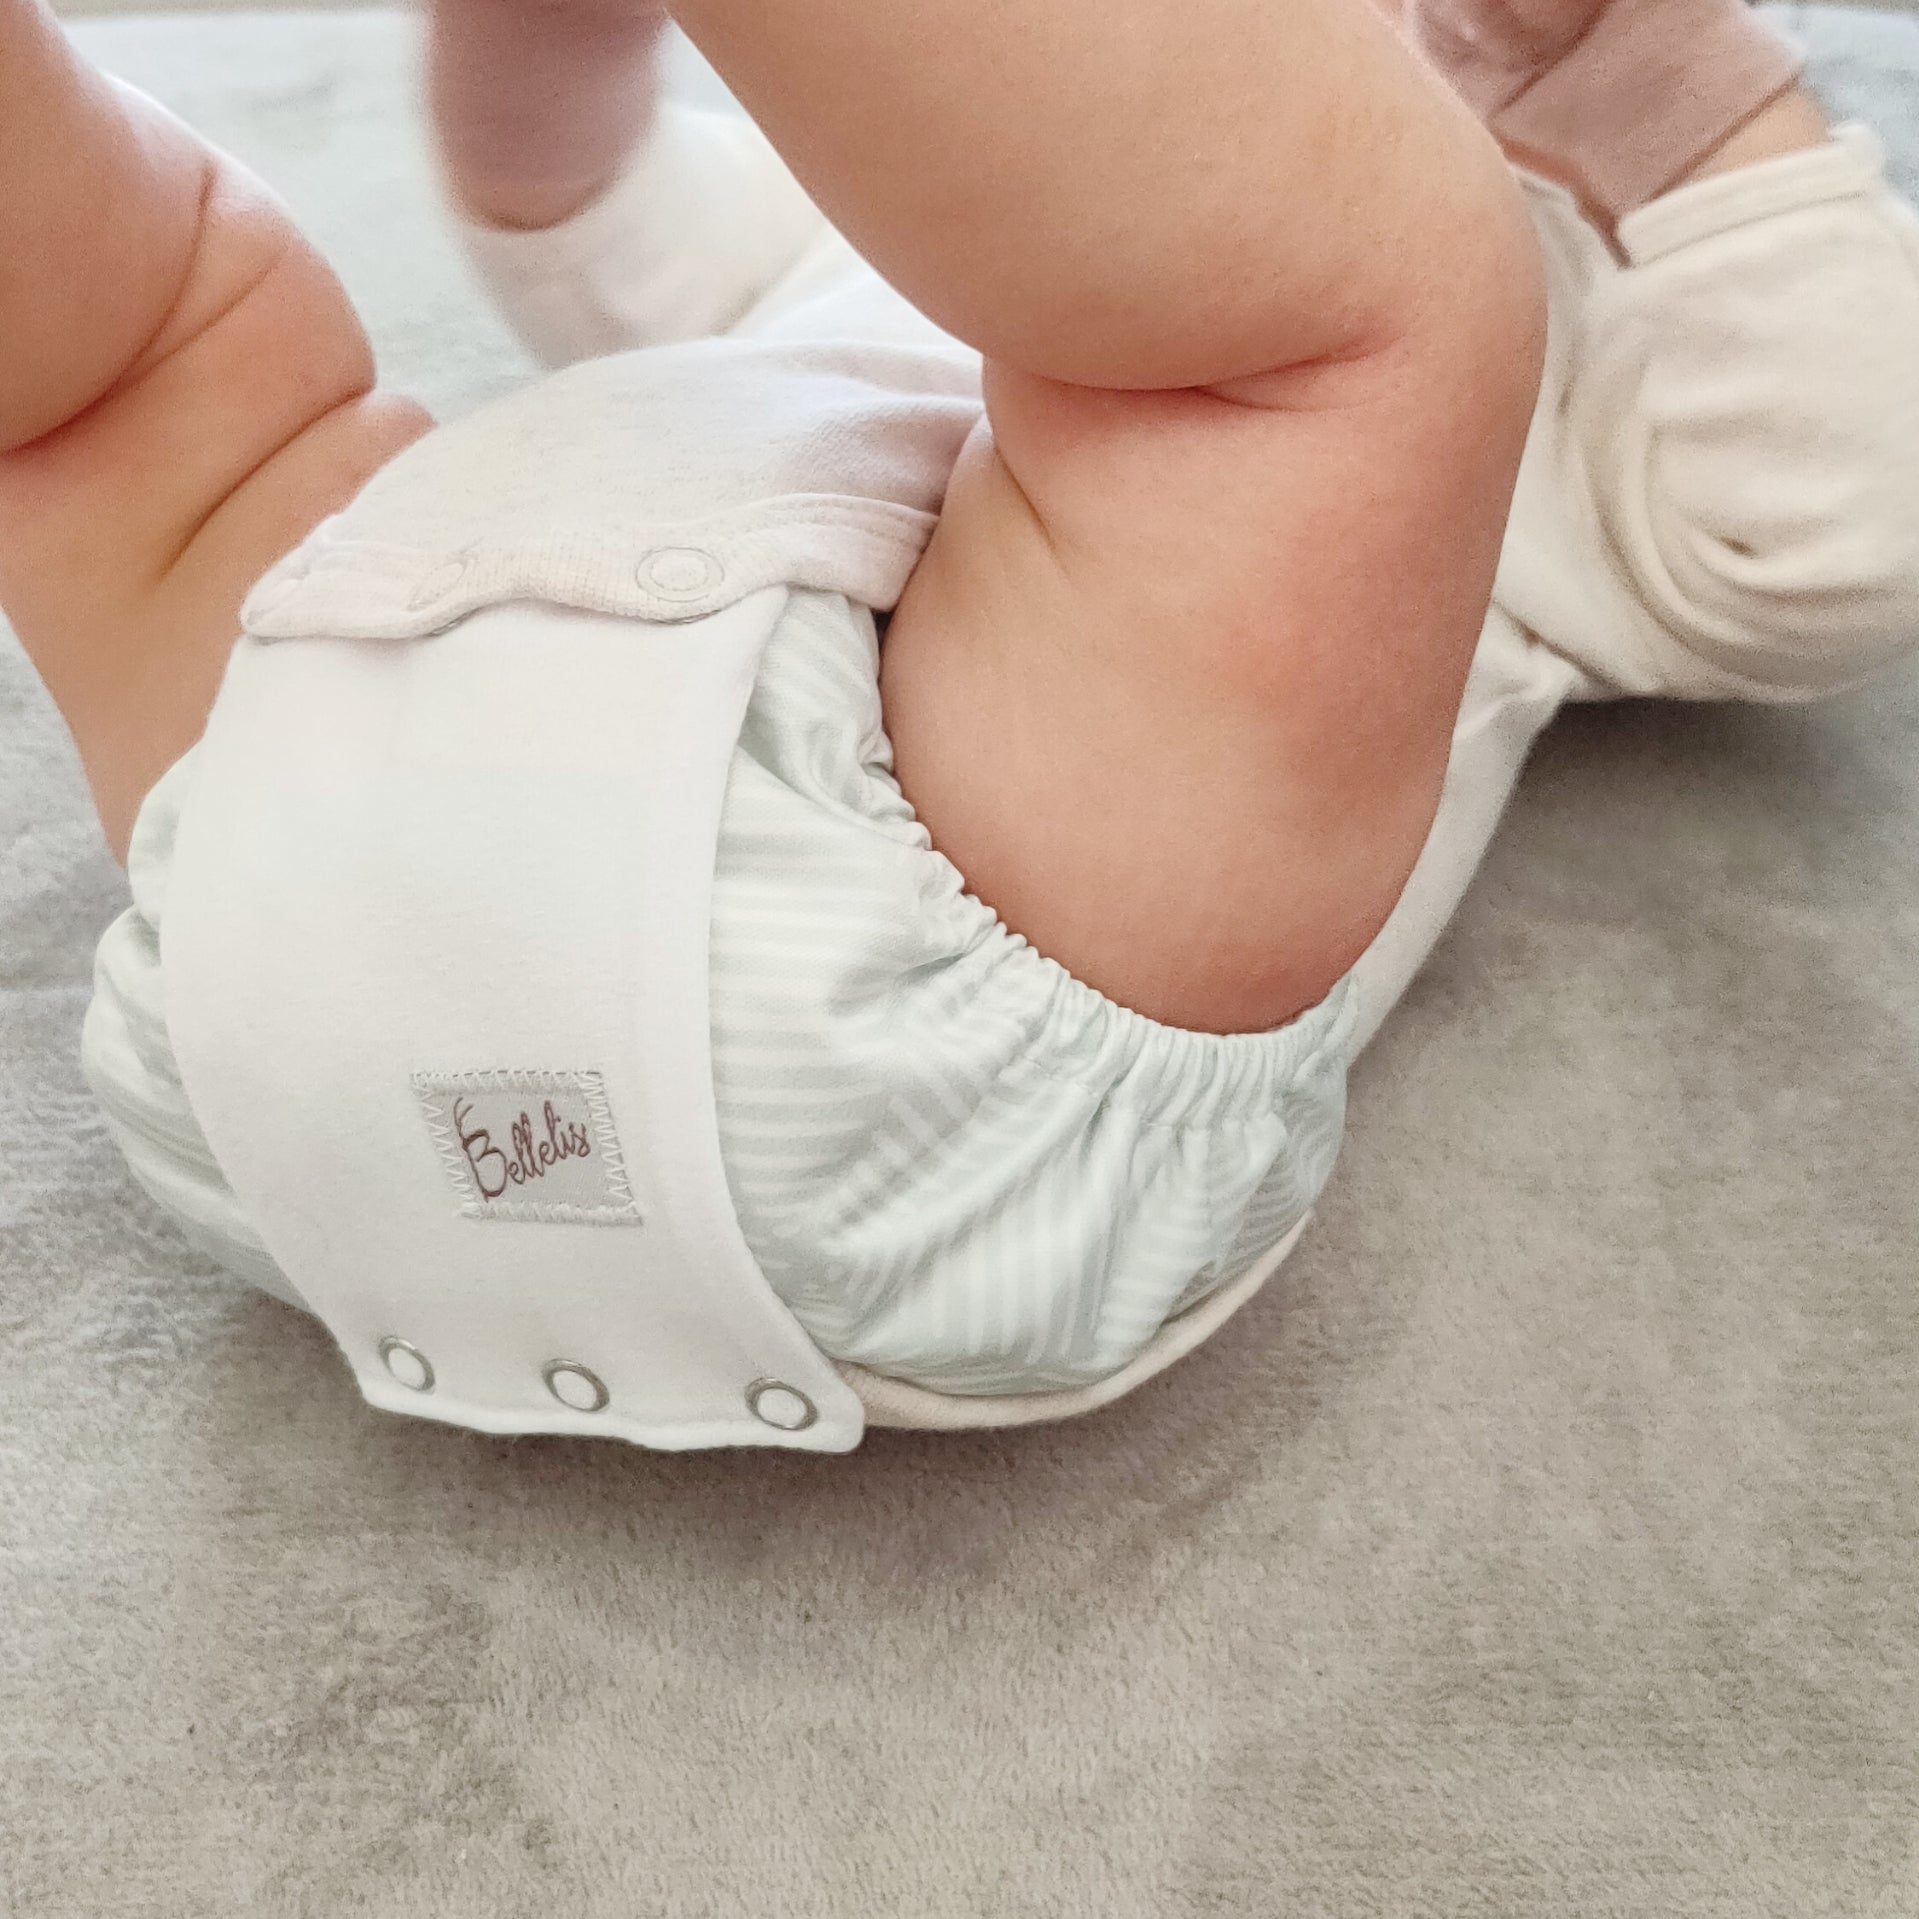 Baby bodysuit extender - Bellelis Snap & Extend